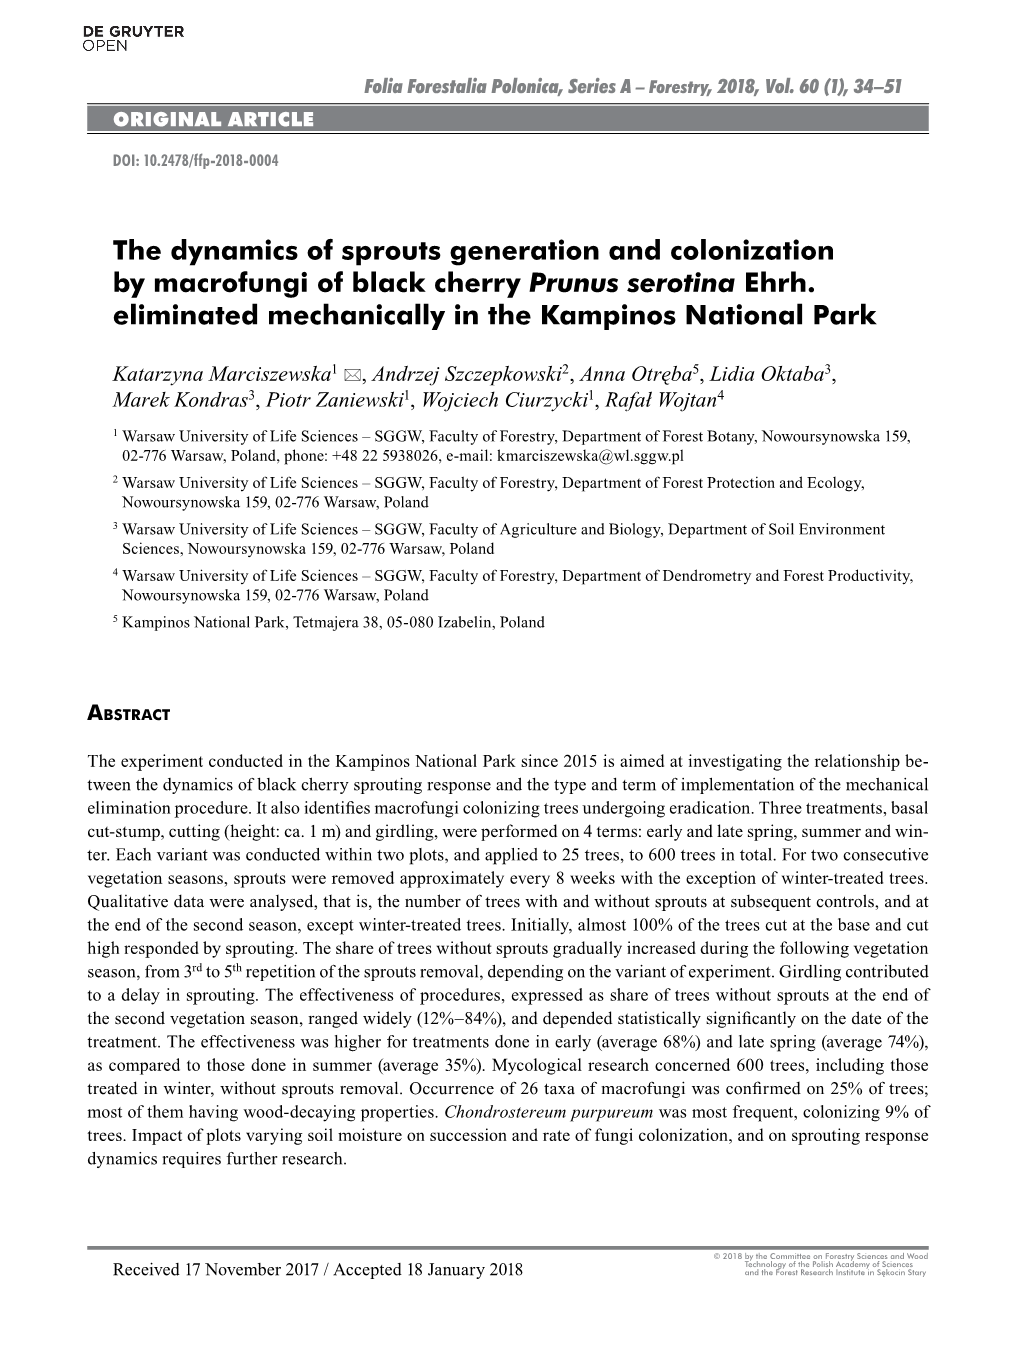 The Dynamics of Sprouts Generation and Colonization by Macrofungi of Black Cherry Prunus Serotina Ehrh